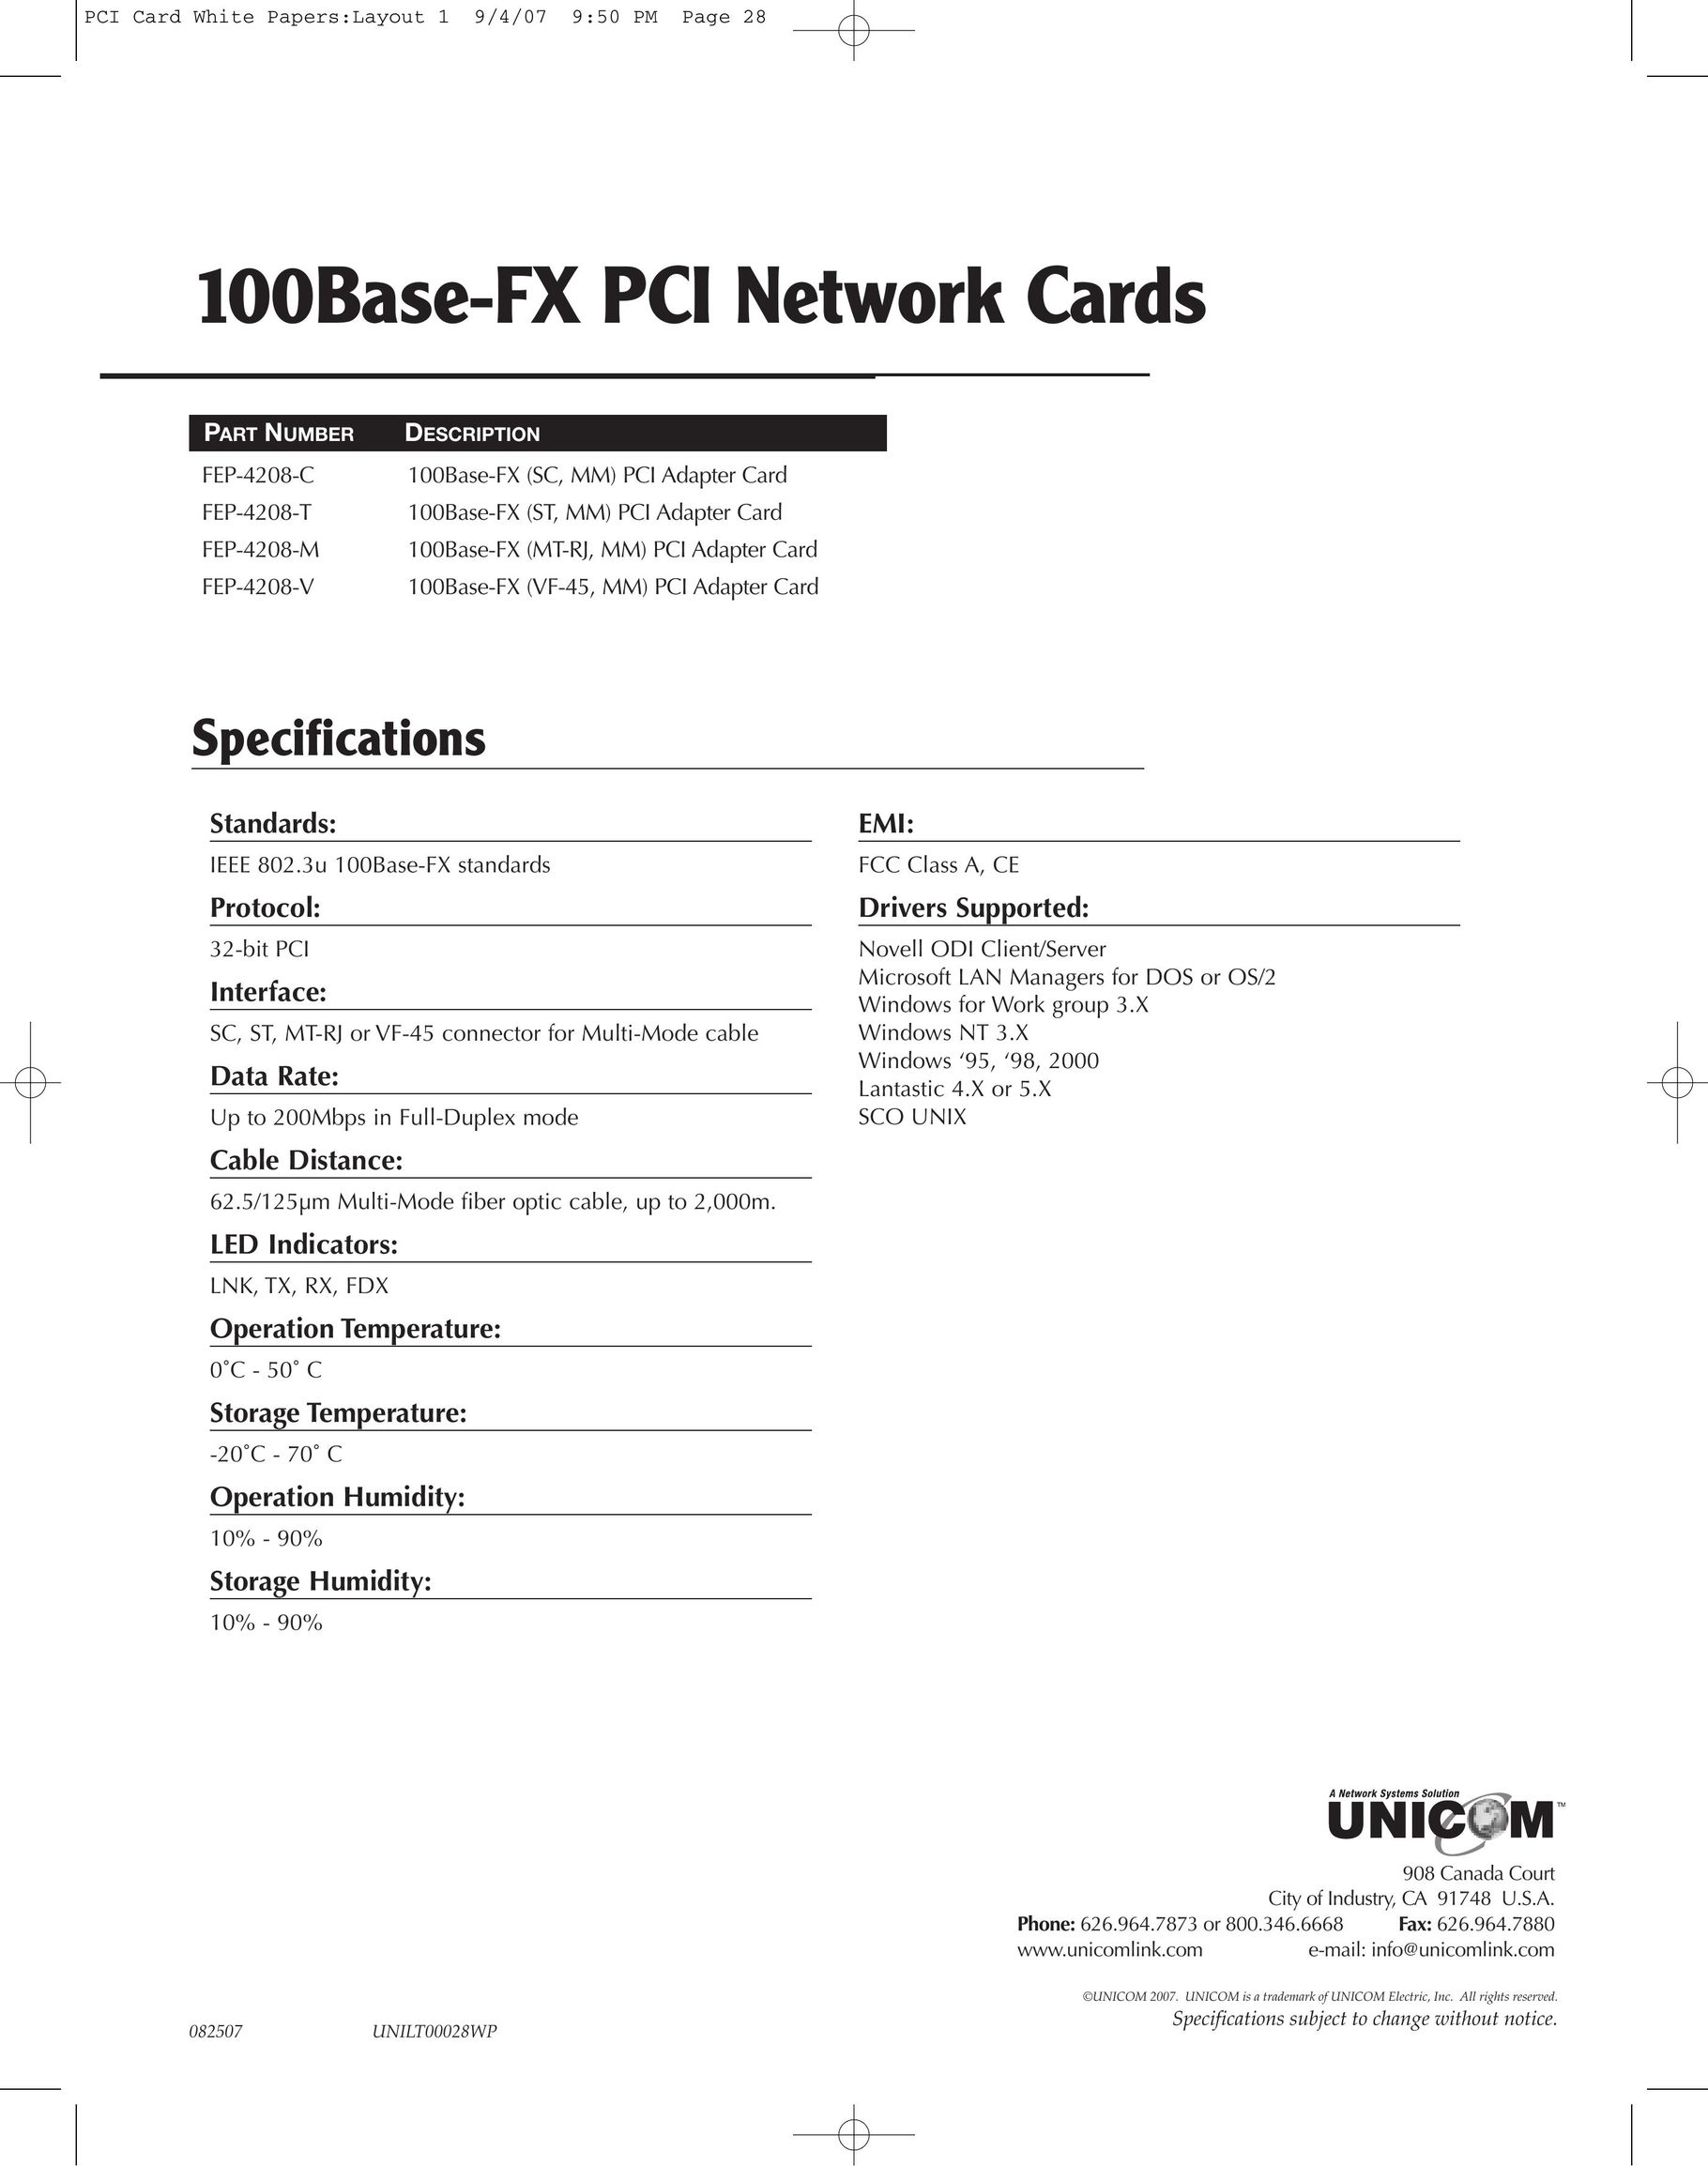 UNICOM Electric FEP-4208-M Network Card User Manual